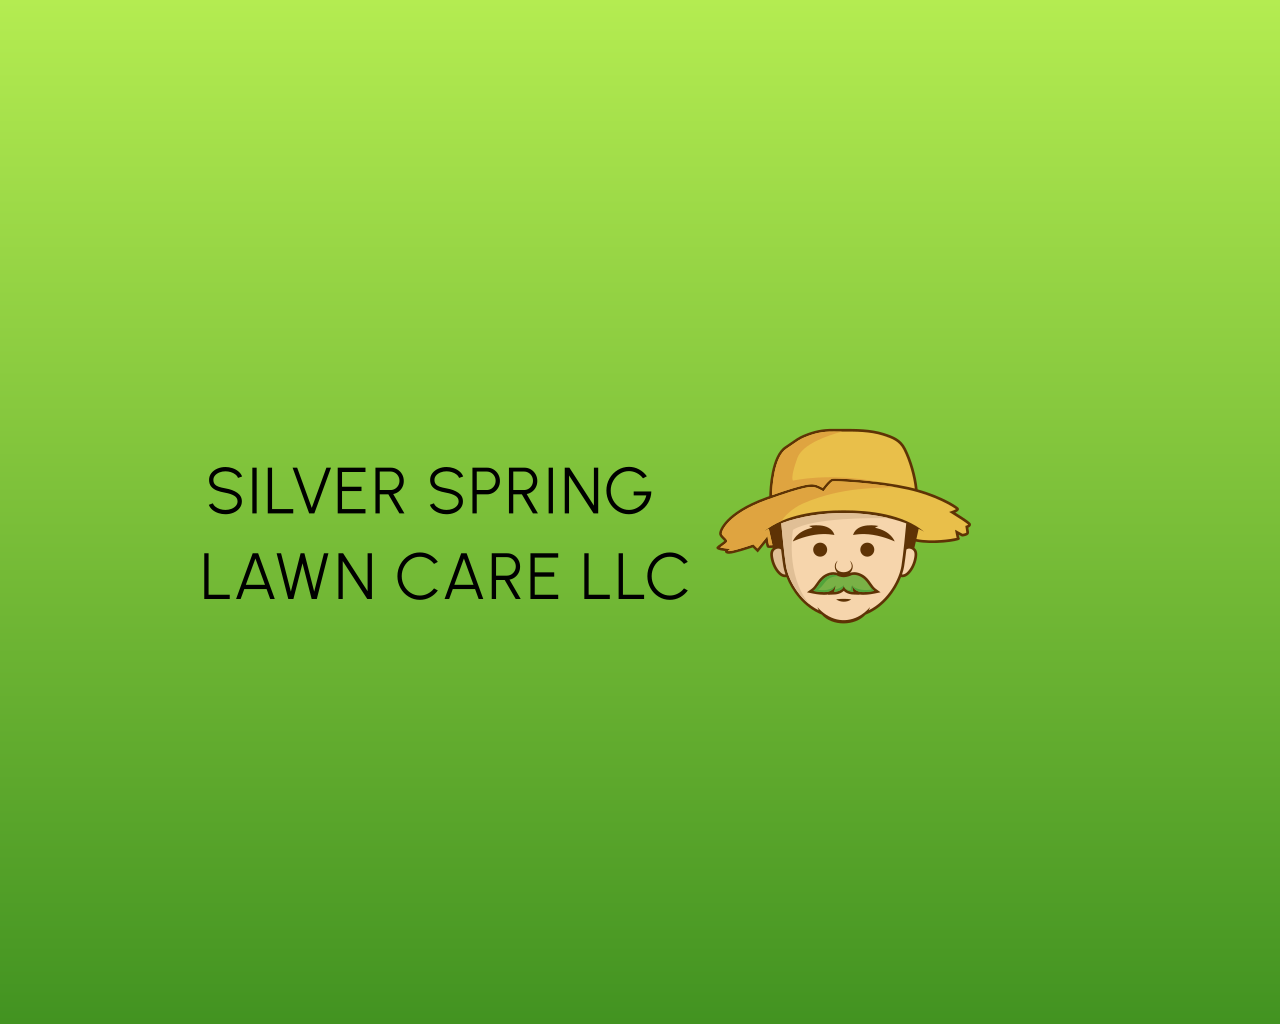 Silver Spring Lawn Care LLC